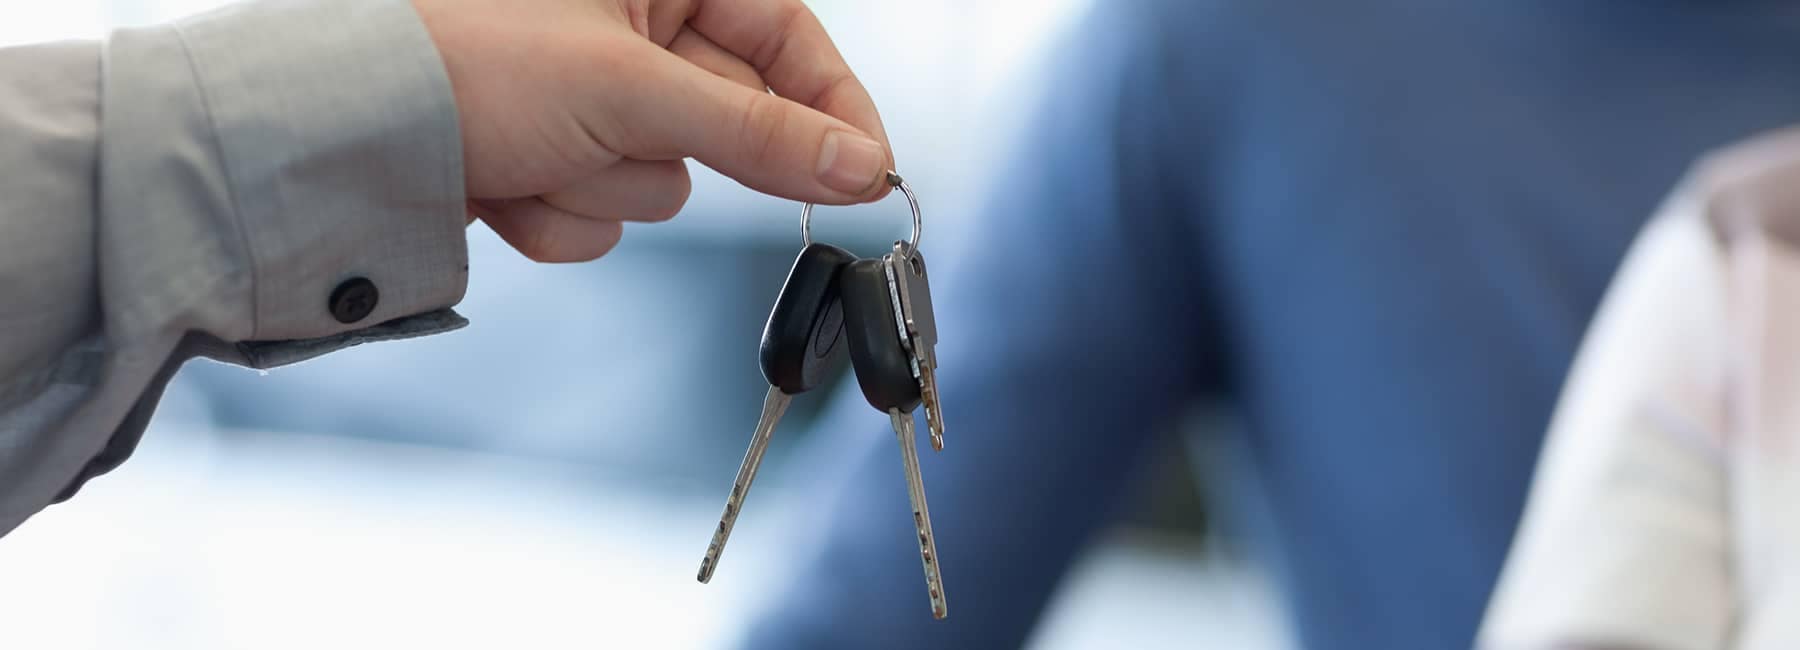 salesman-hands-car-keys-to-customer